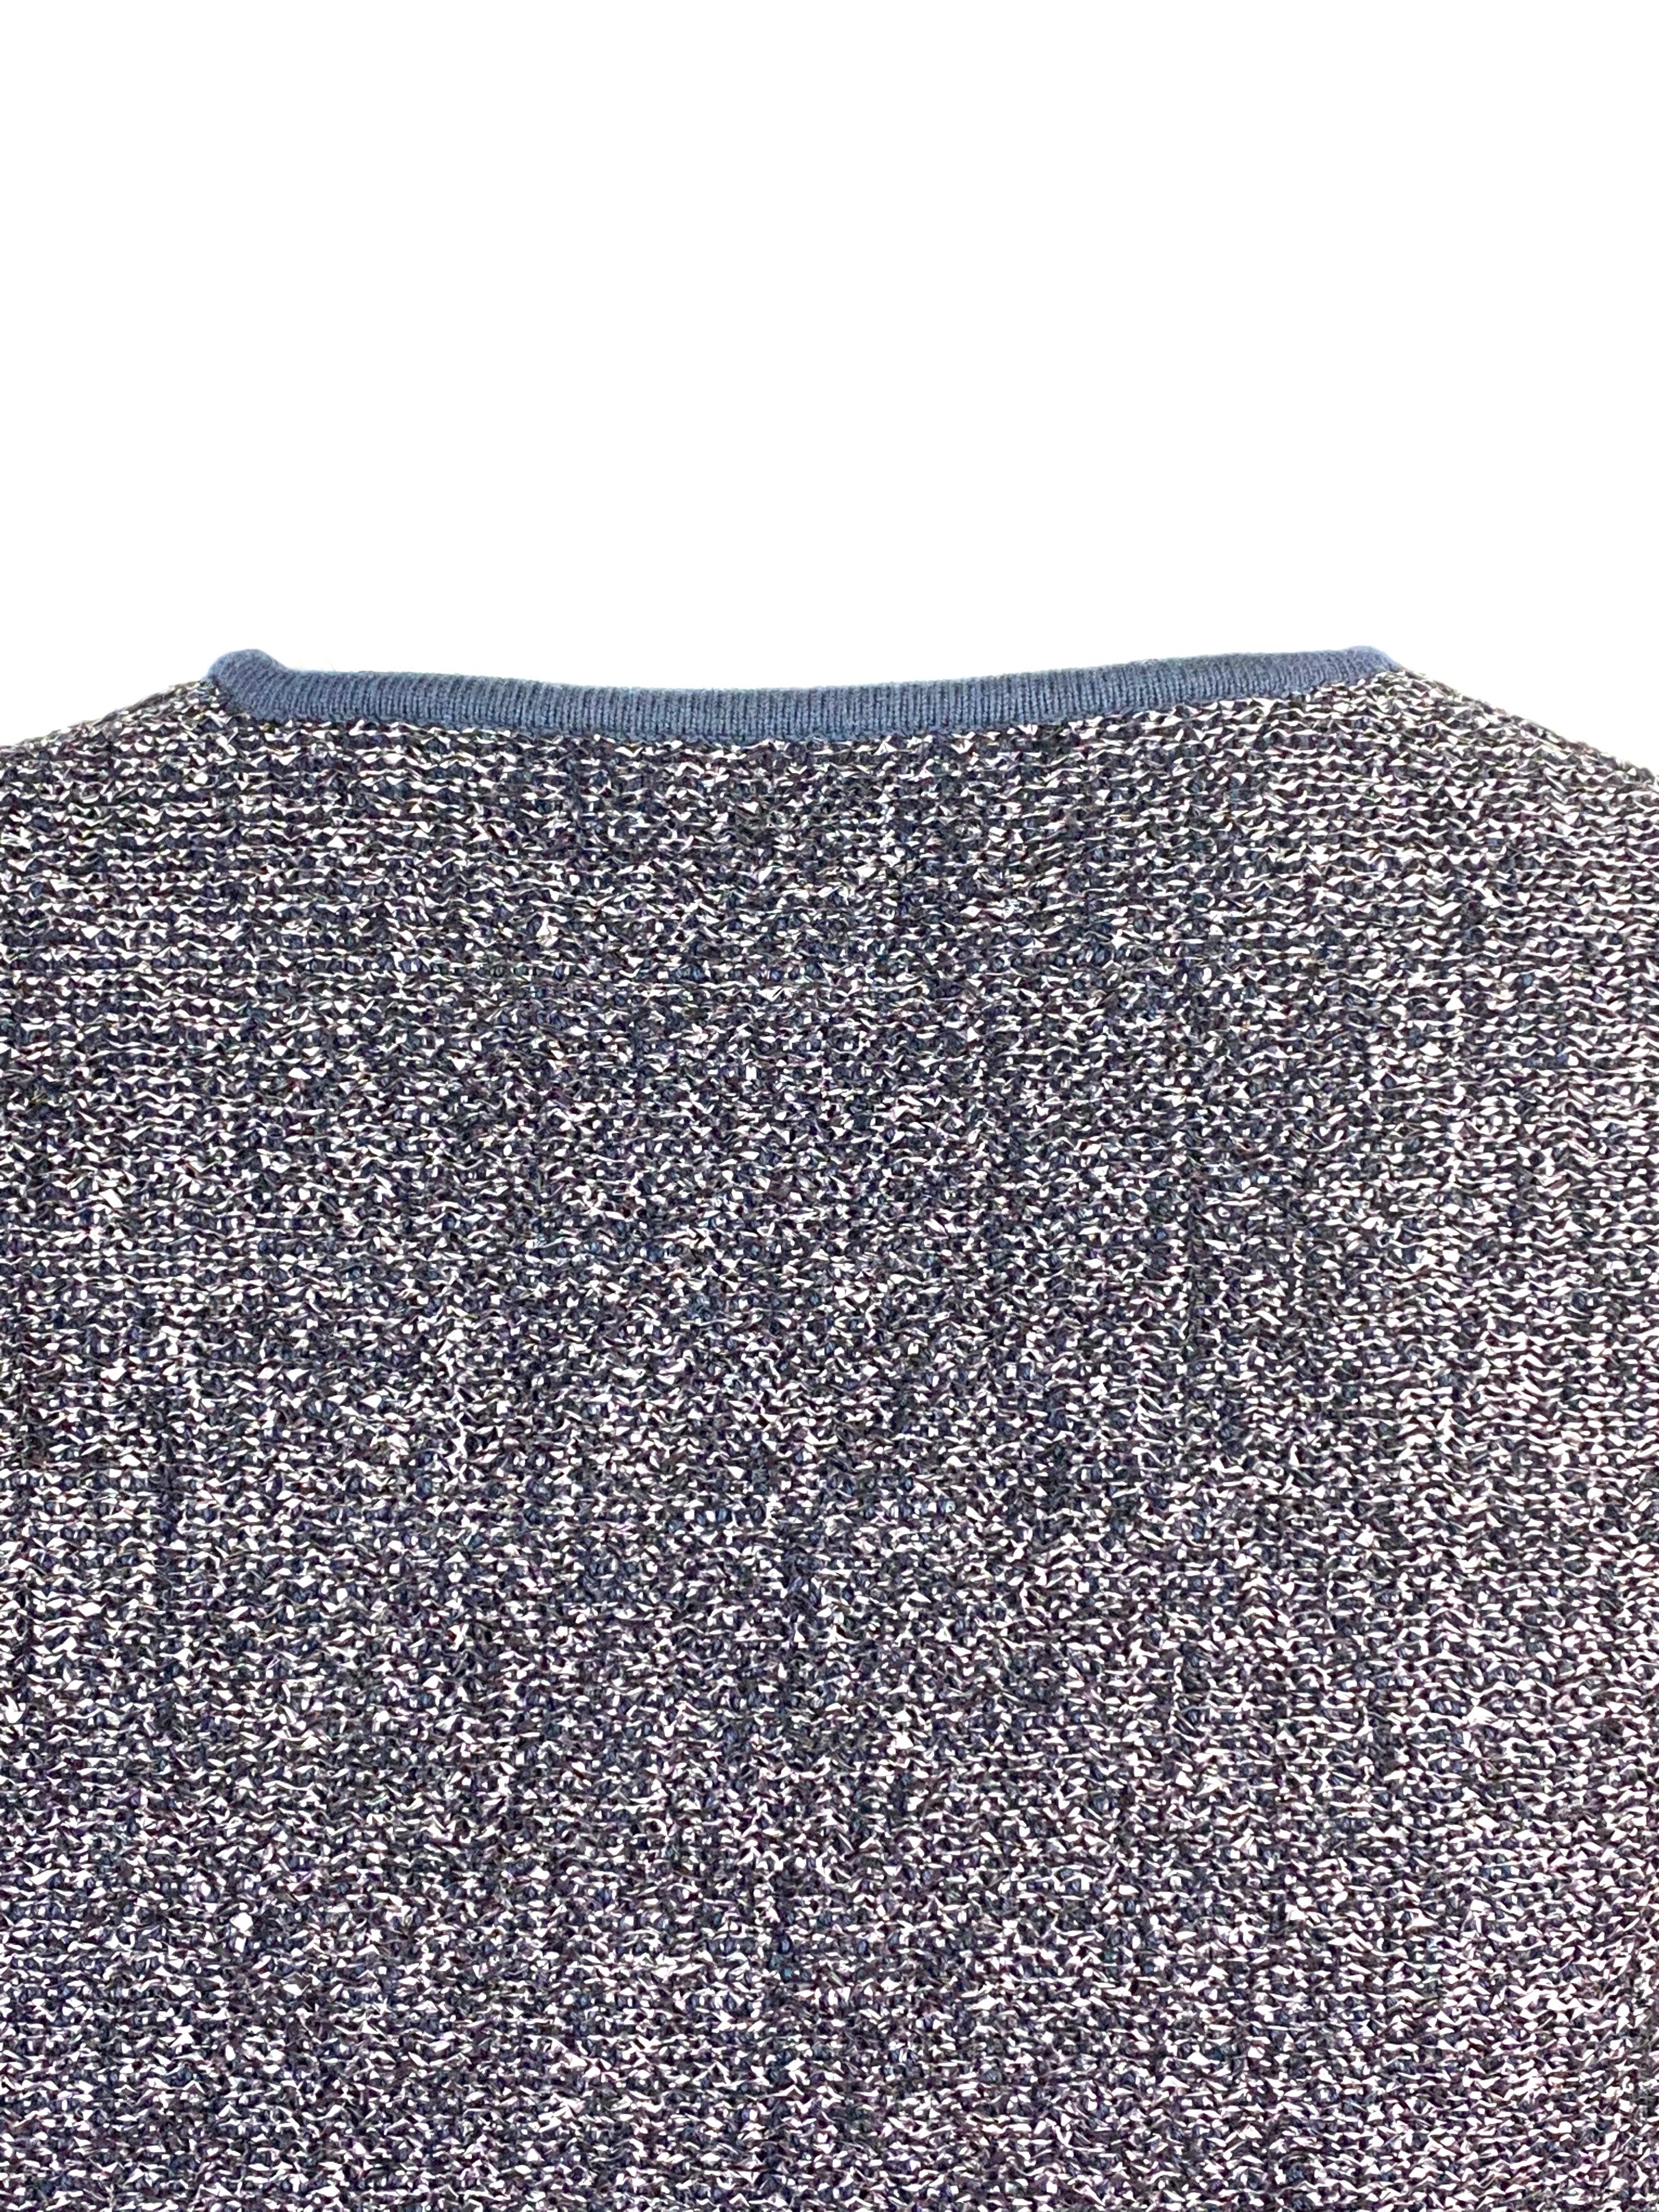 Gray Christian Dior Knit Navy Metallic Crop Top w/ Pencil Skirt Set